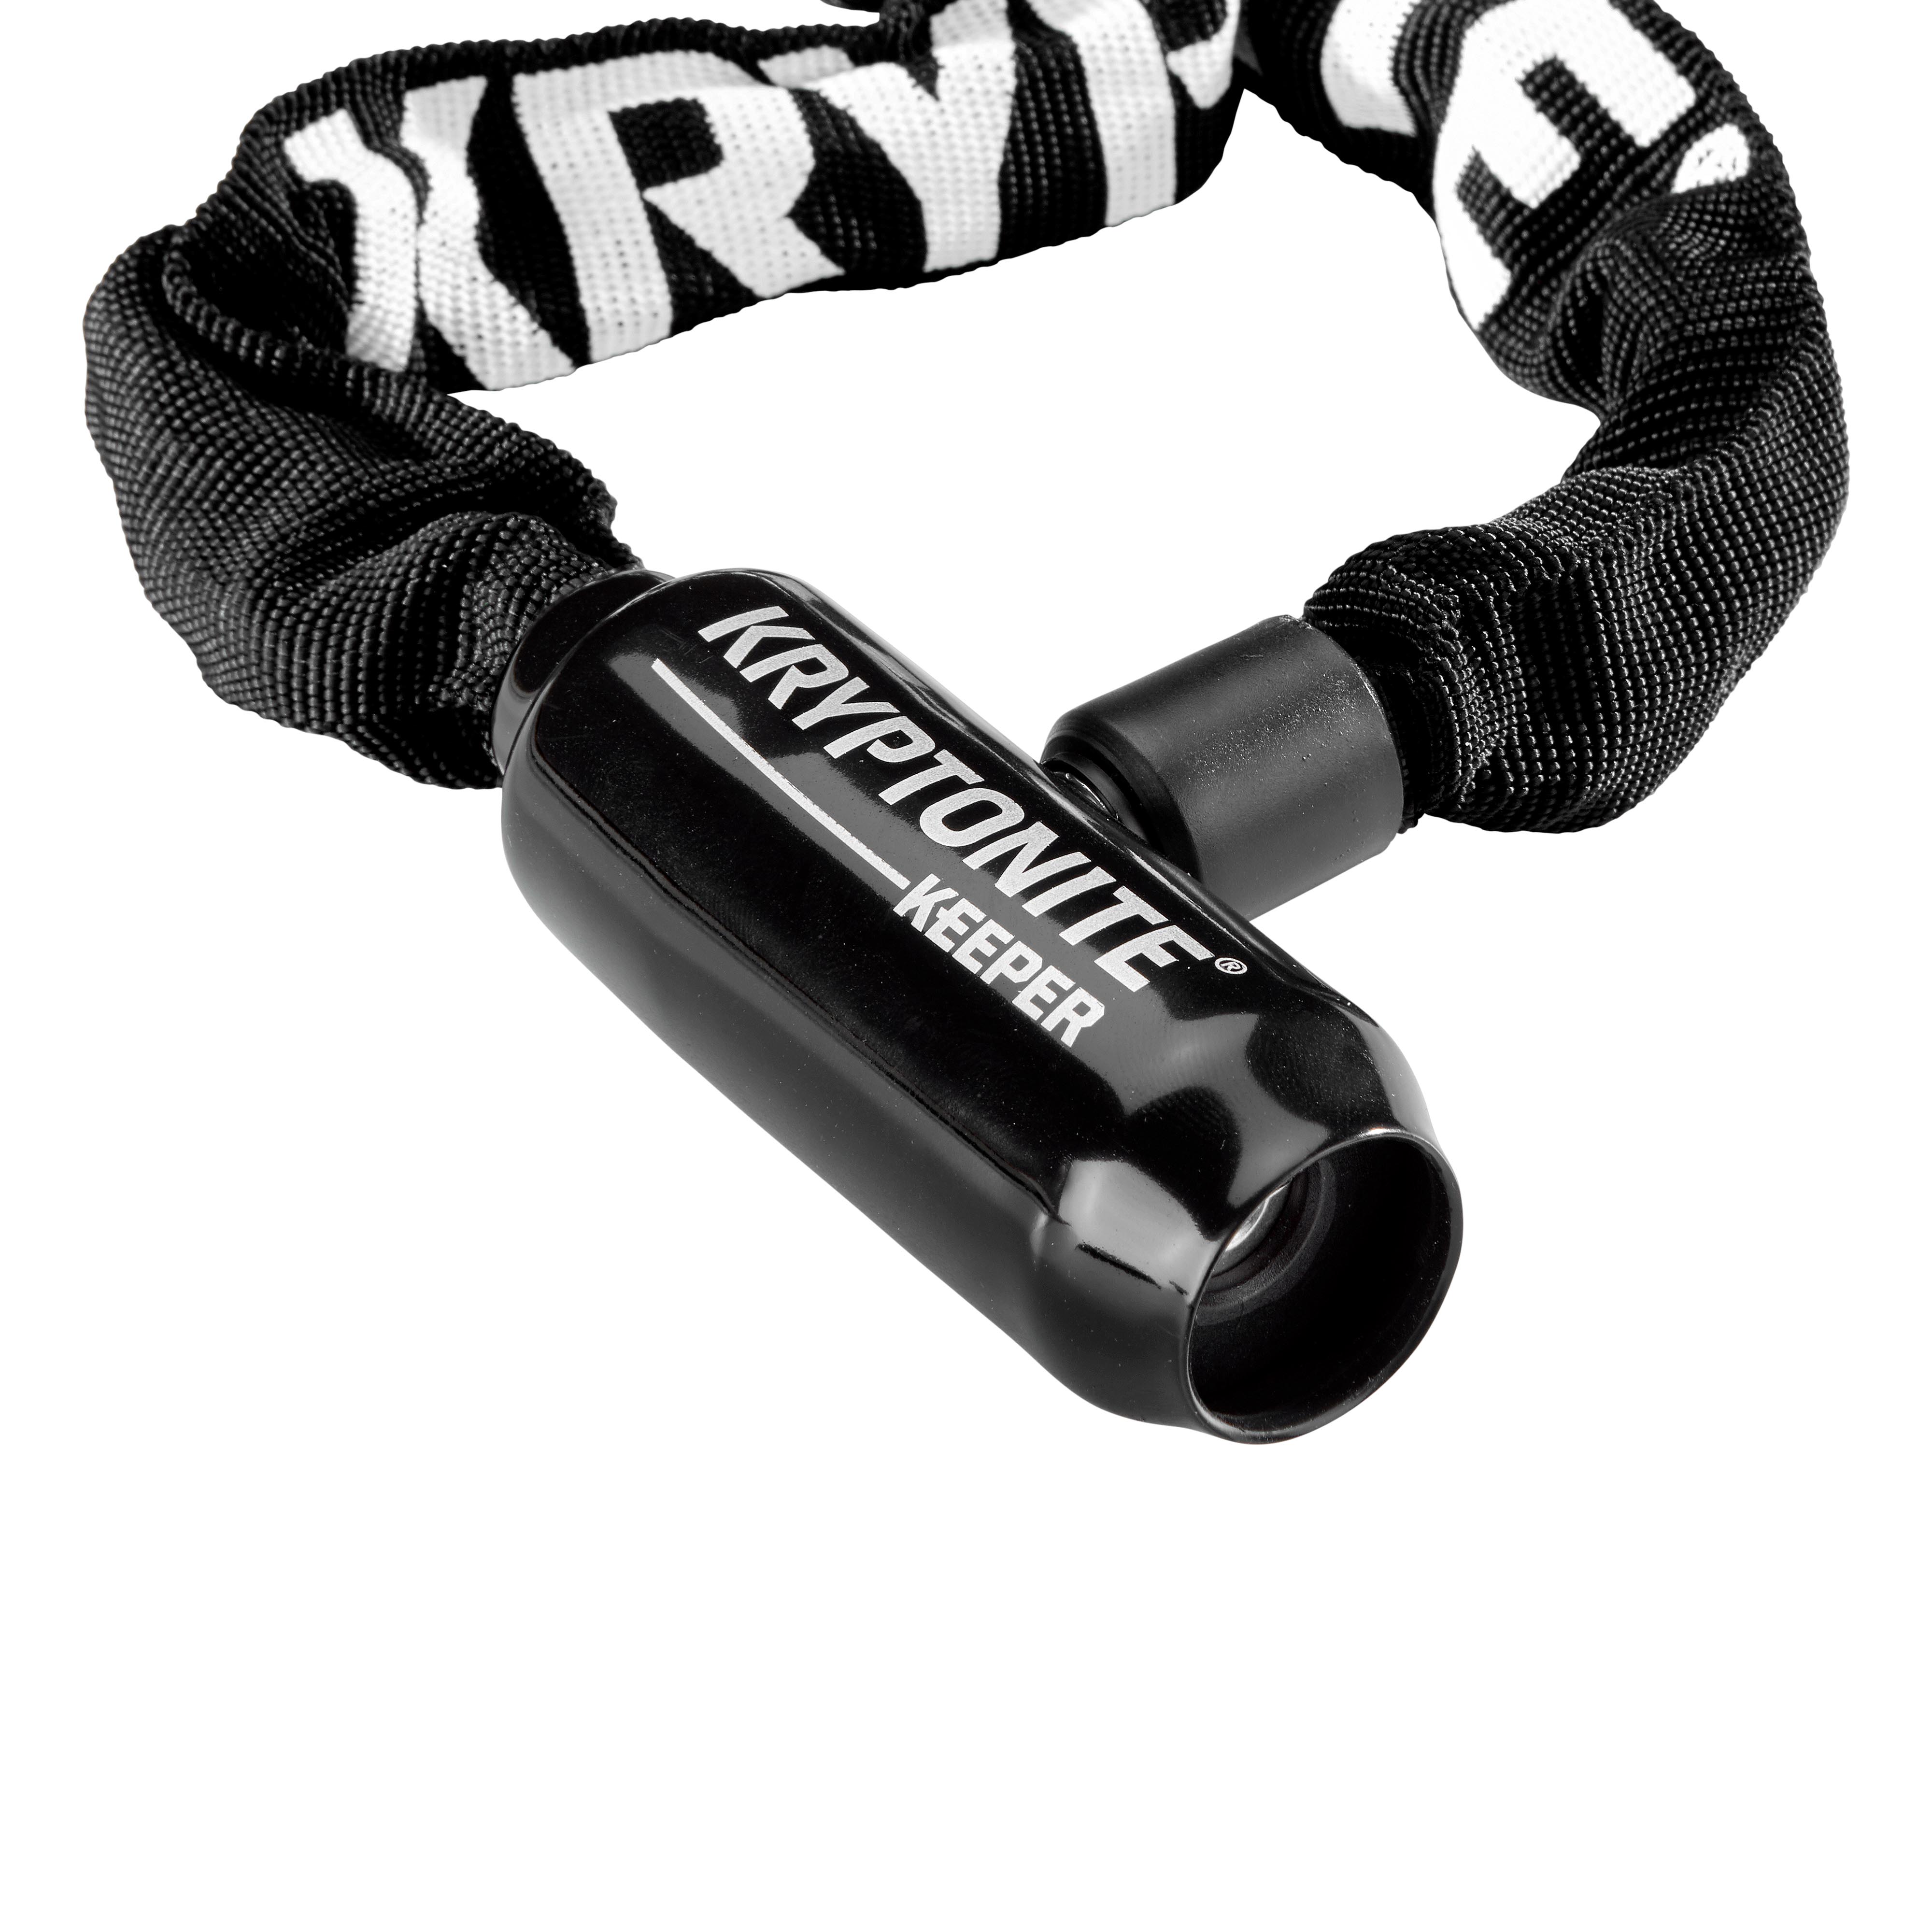 Kryptonite Keeper 585 Integrated Chain Lock (Black) (2.8'/85cm) -  Performance Bicycle